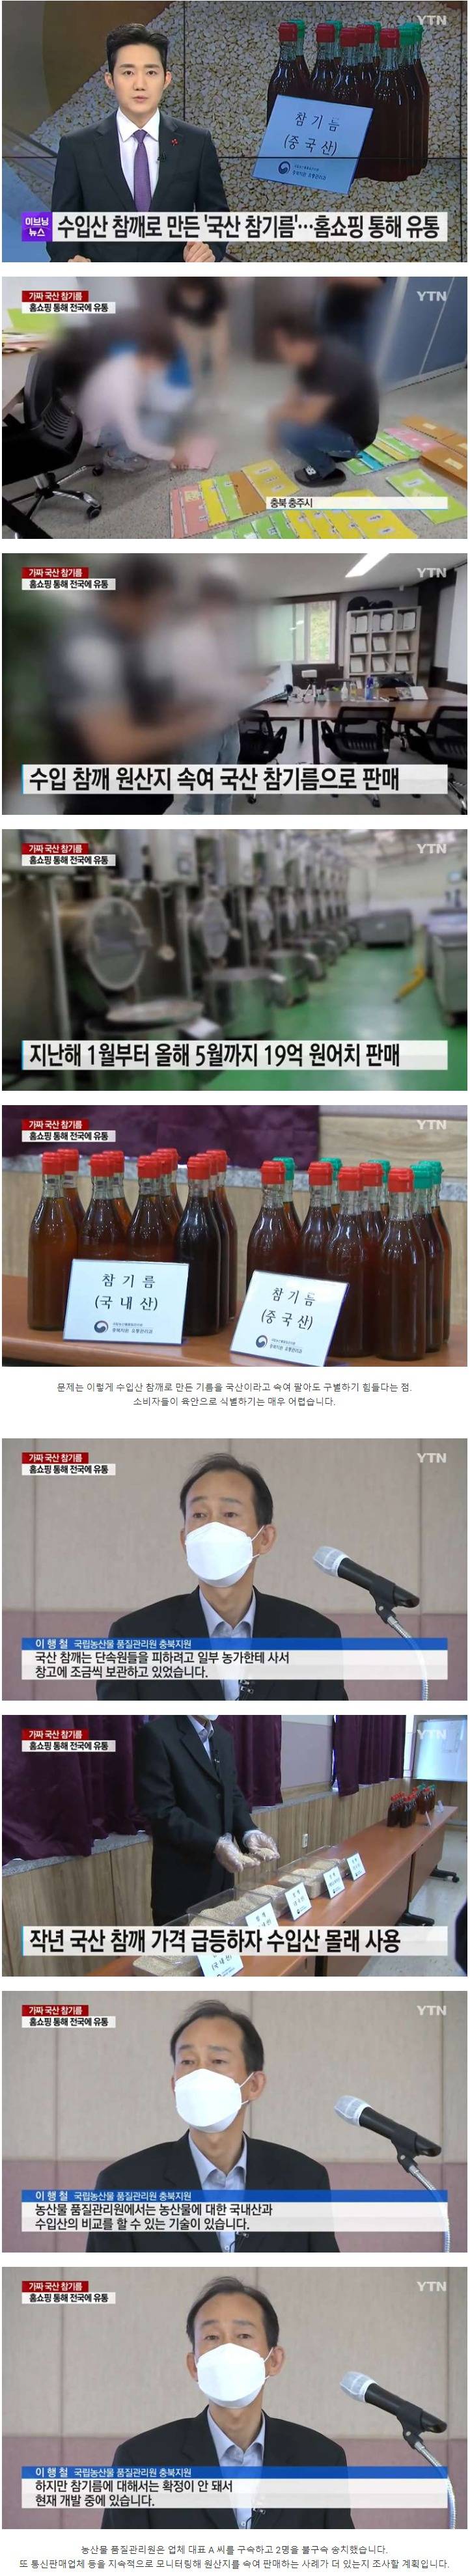 Korean sesame oil made from imported sesame seeds.